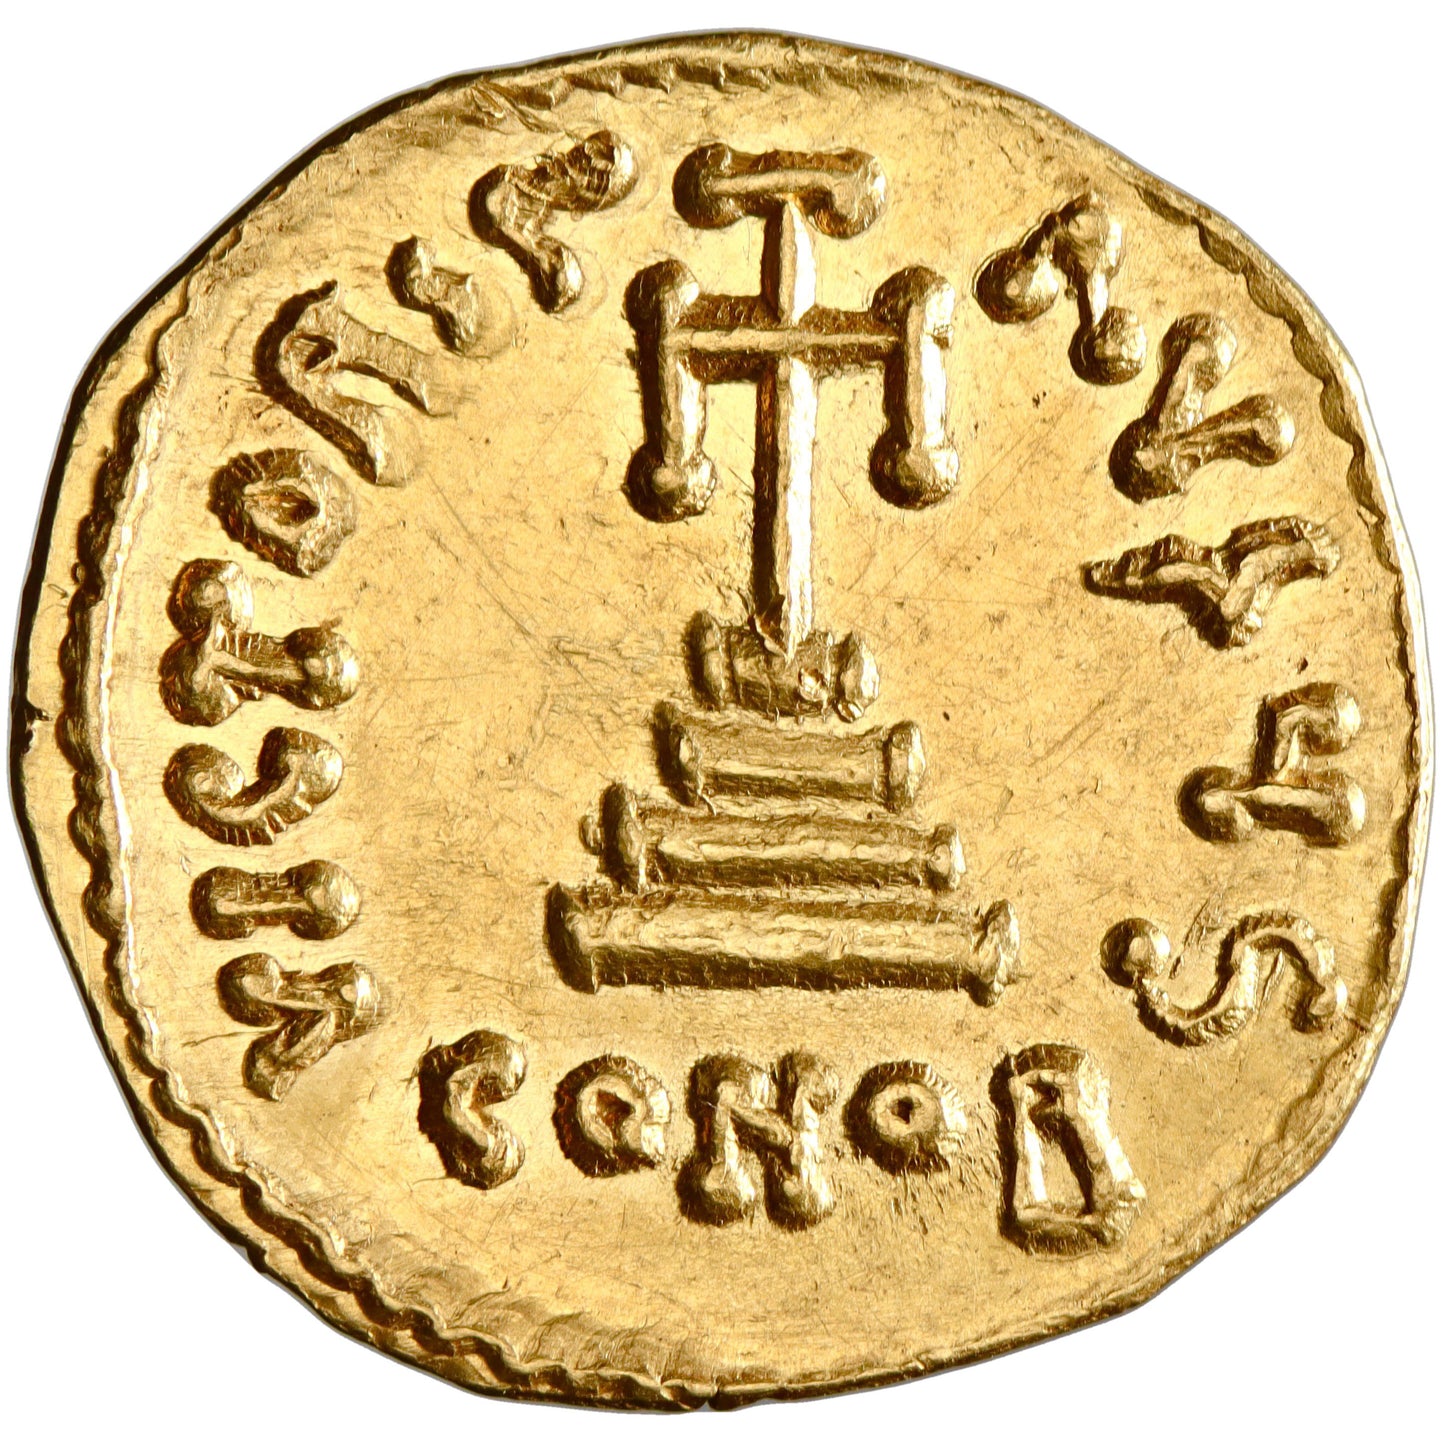 Byzantine, Constans II Pogonatus, gold solidus, Constantinople mint, officina S, 654-659 CE, Constans and Constantine IV